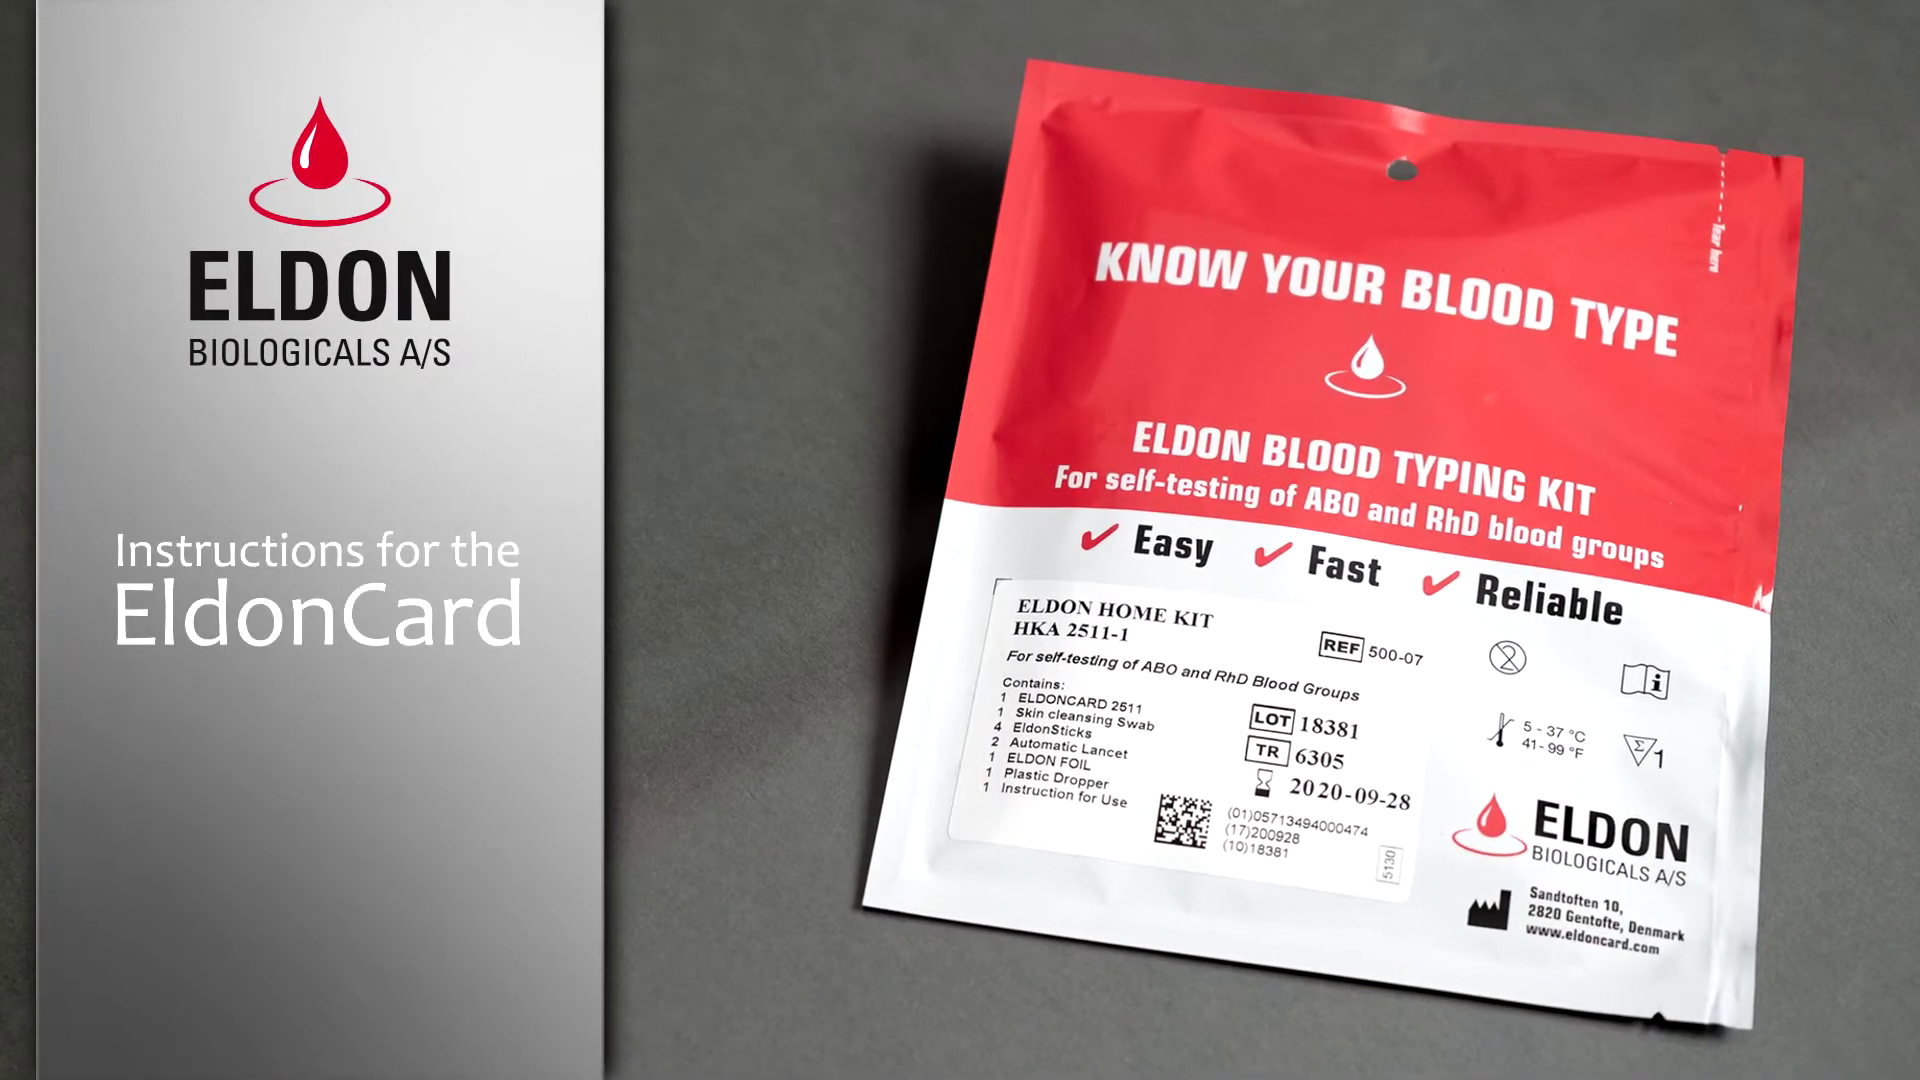 Eldoncard Home Kit Blood Typing Kit Instructions.